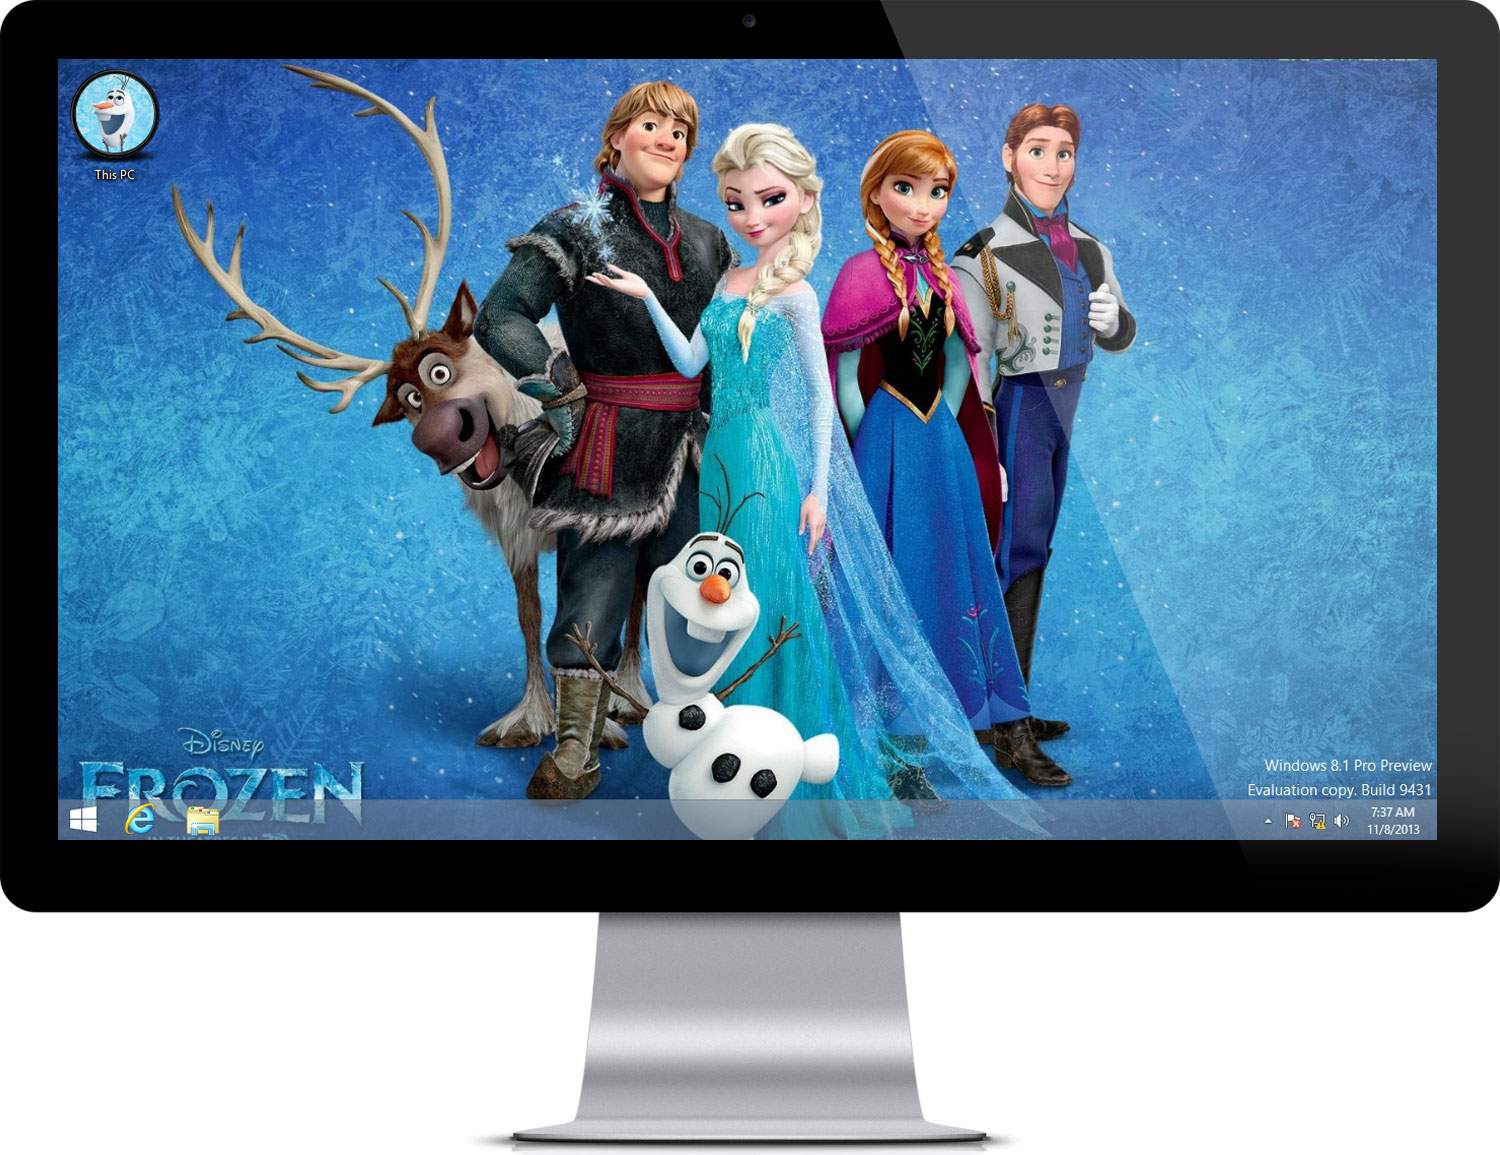 Frozen Movie Theme On Windows Puter